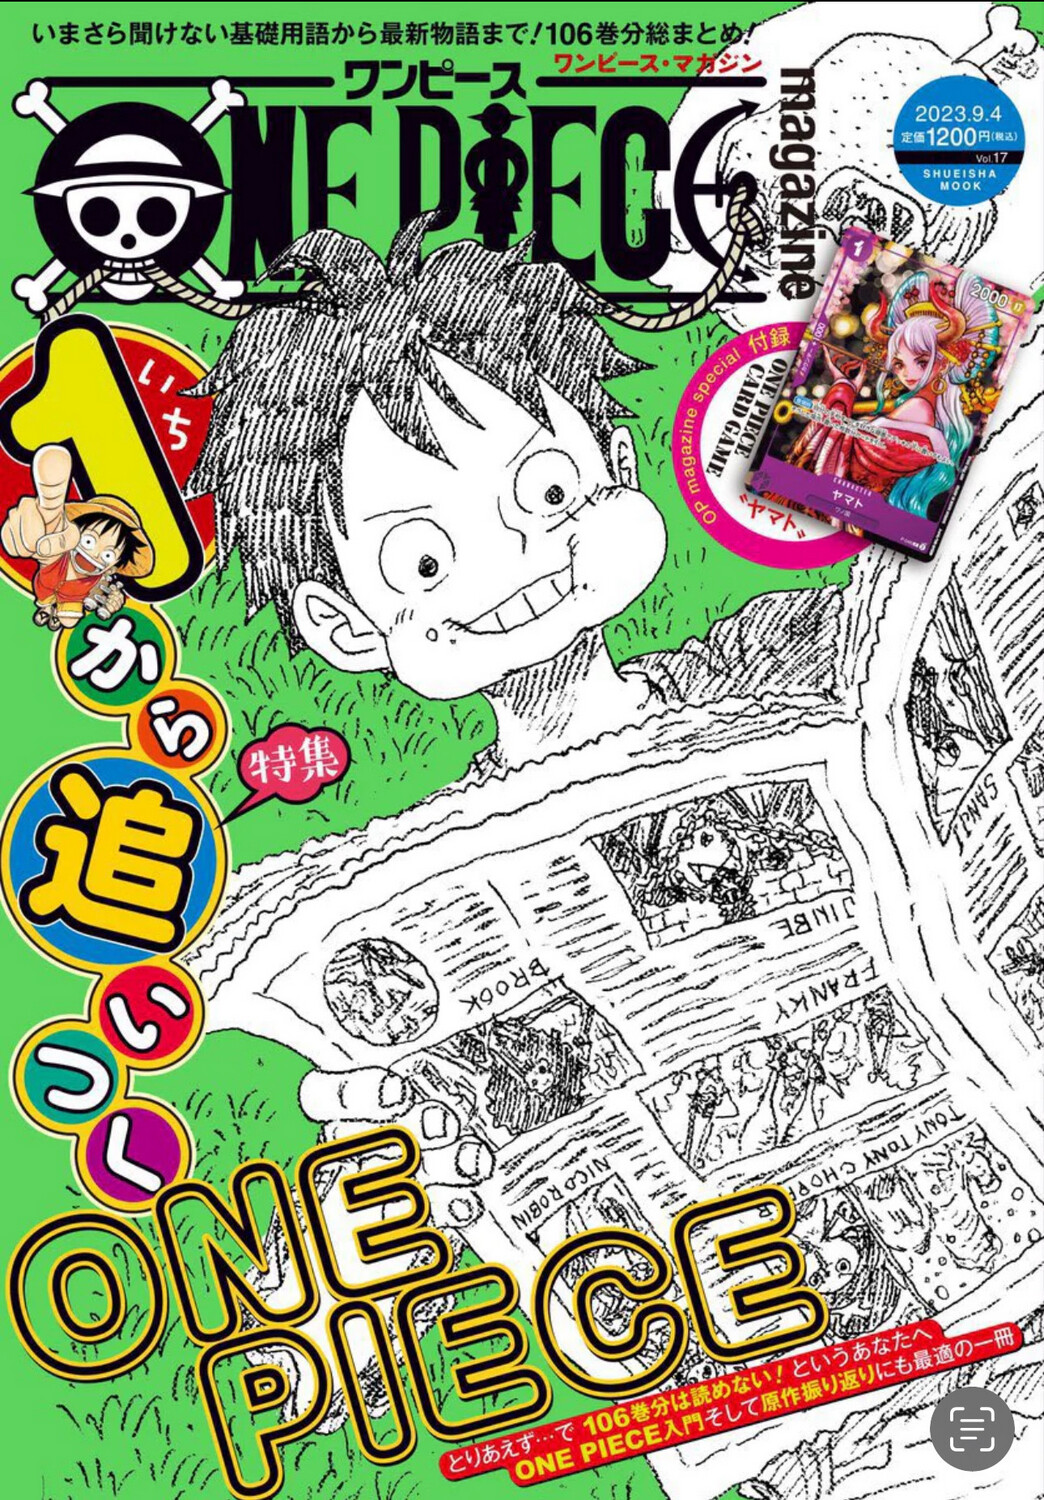 One Piece magazine vol. 17